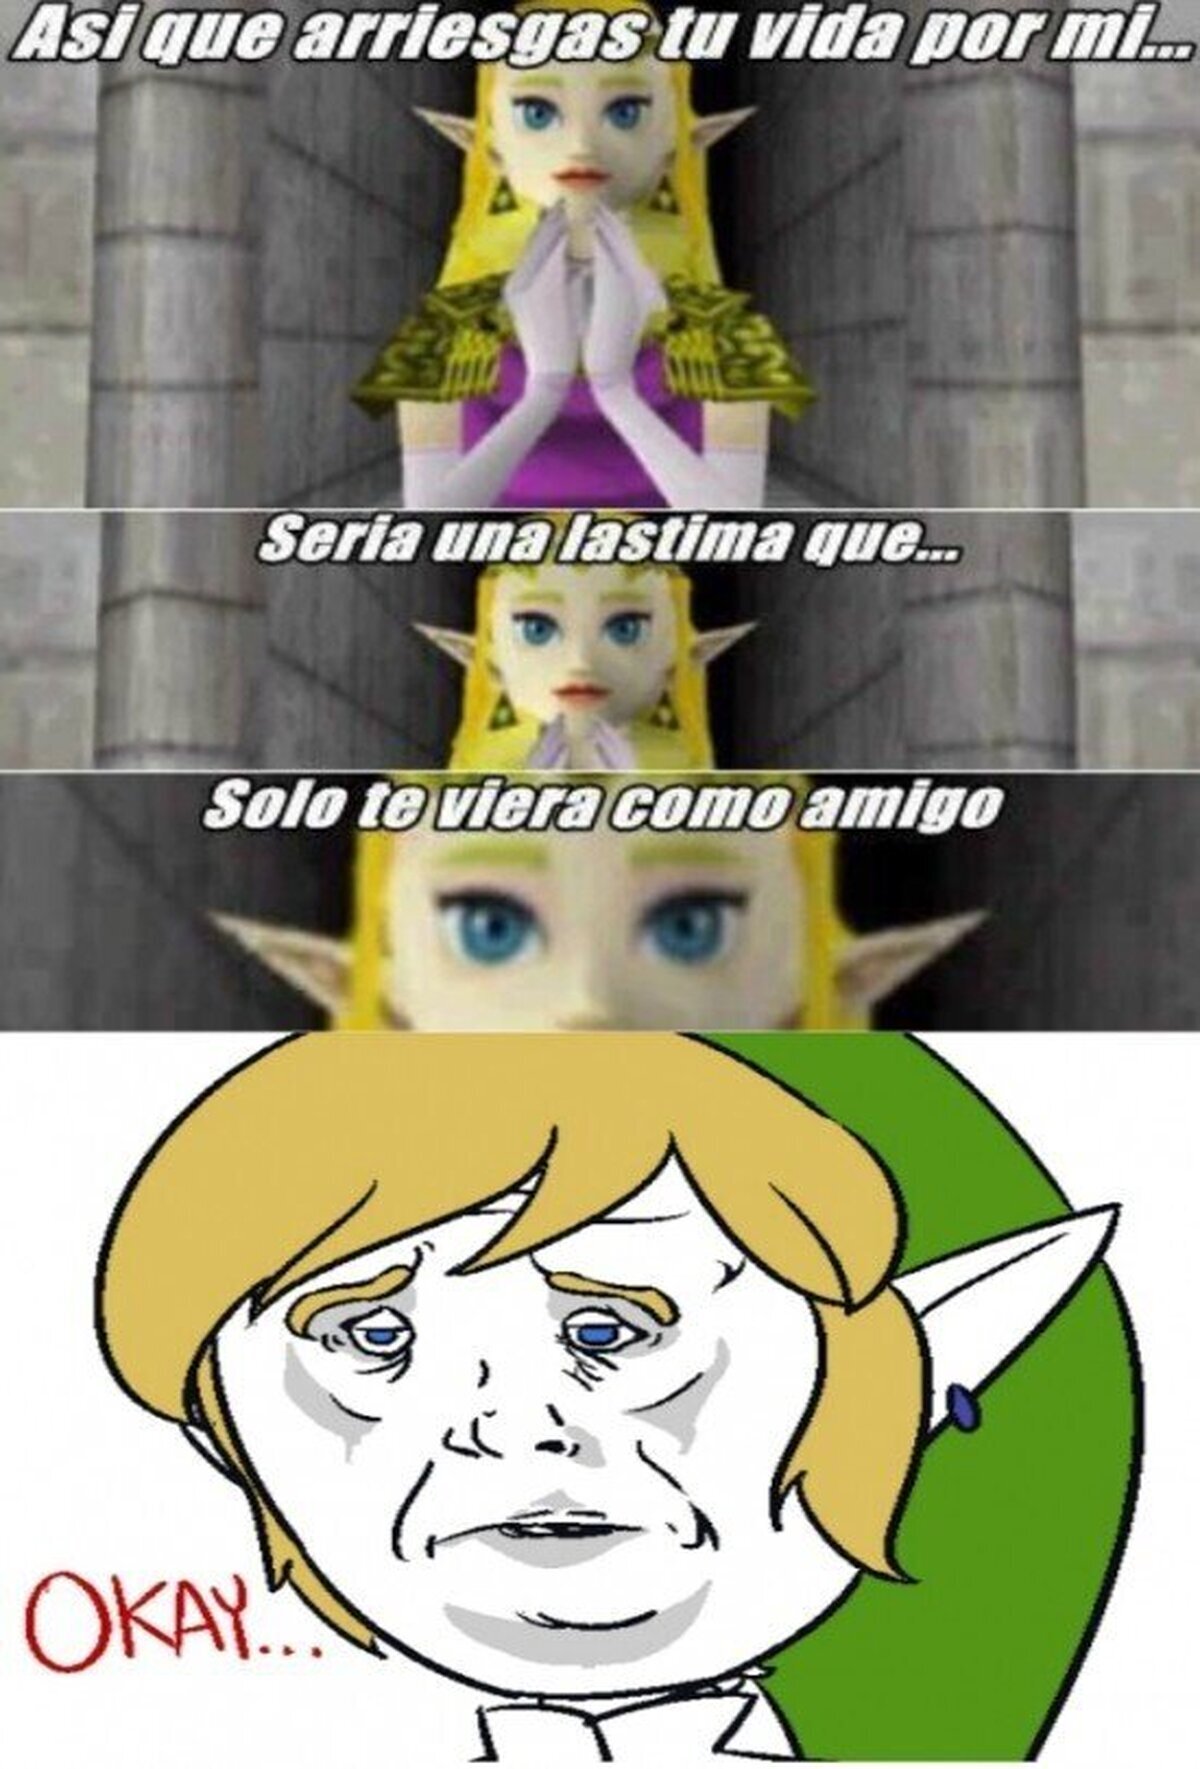 Okay Link